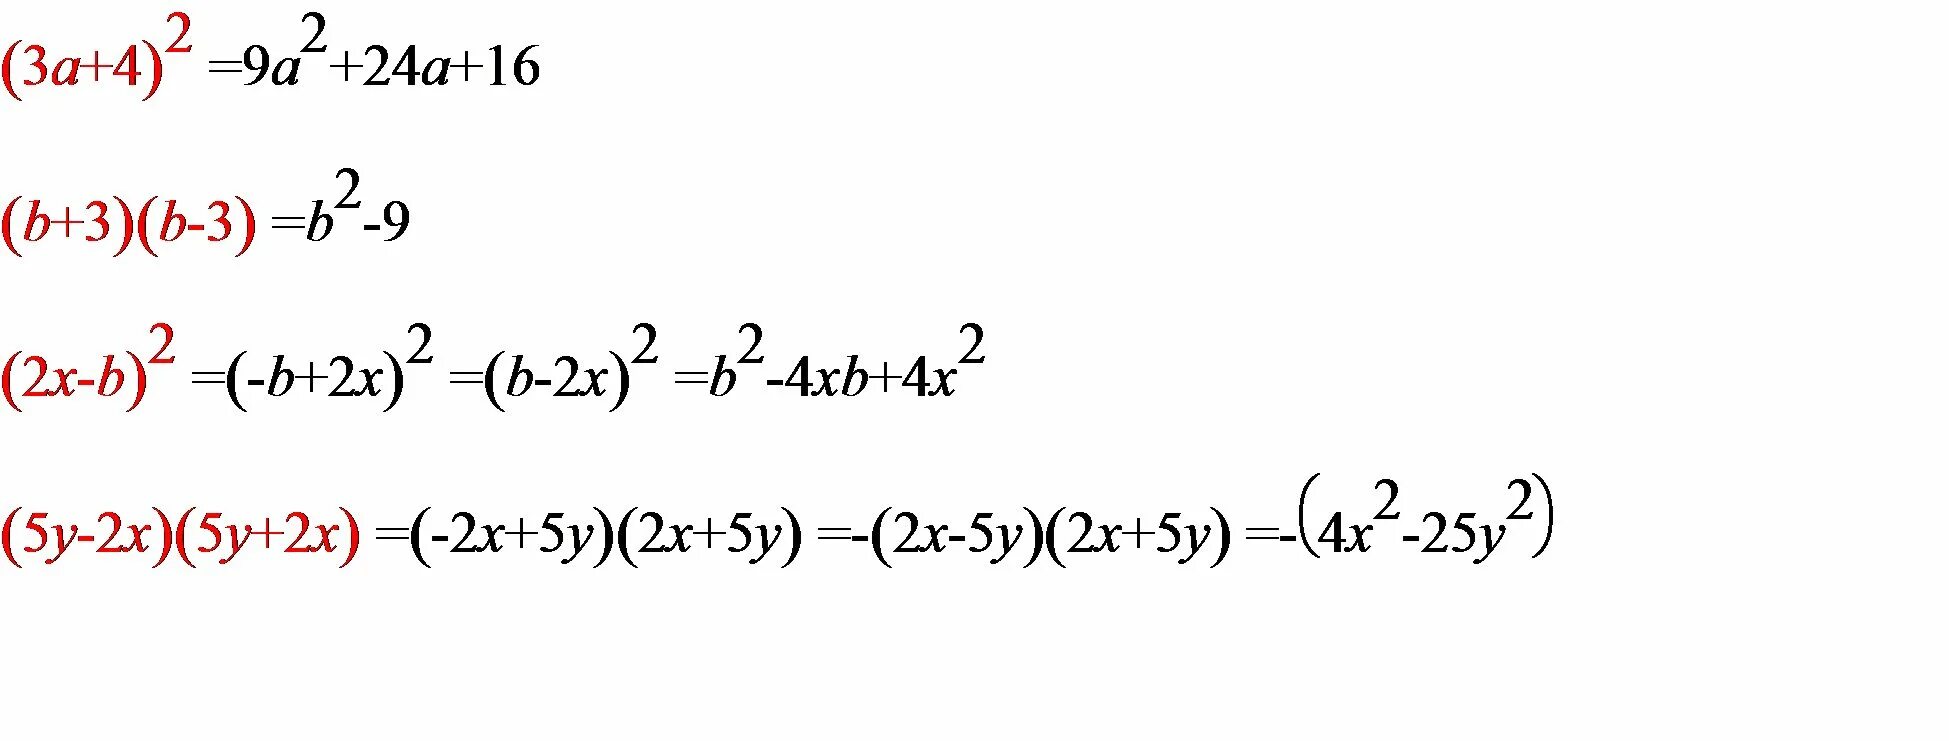 Преобразуйте в многочлен b+3 b-3. (X-Y)^2(X+Y) преобразование в многочлен. Преобразуйте выражение в многочлен.